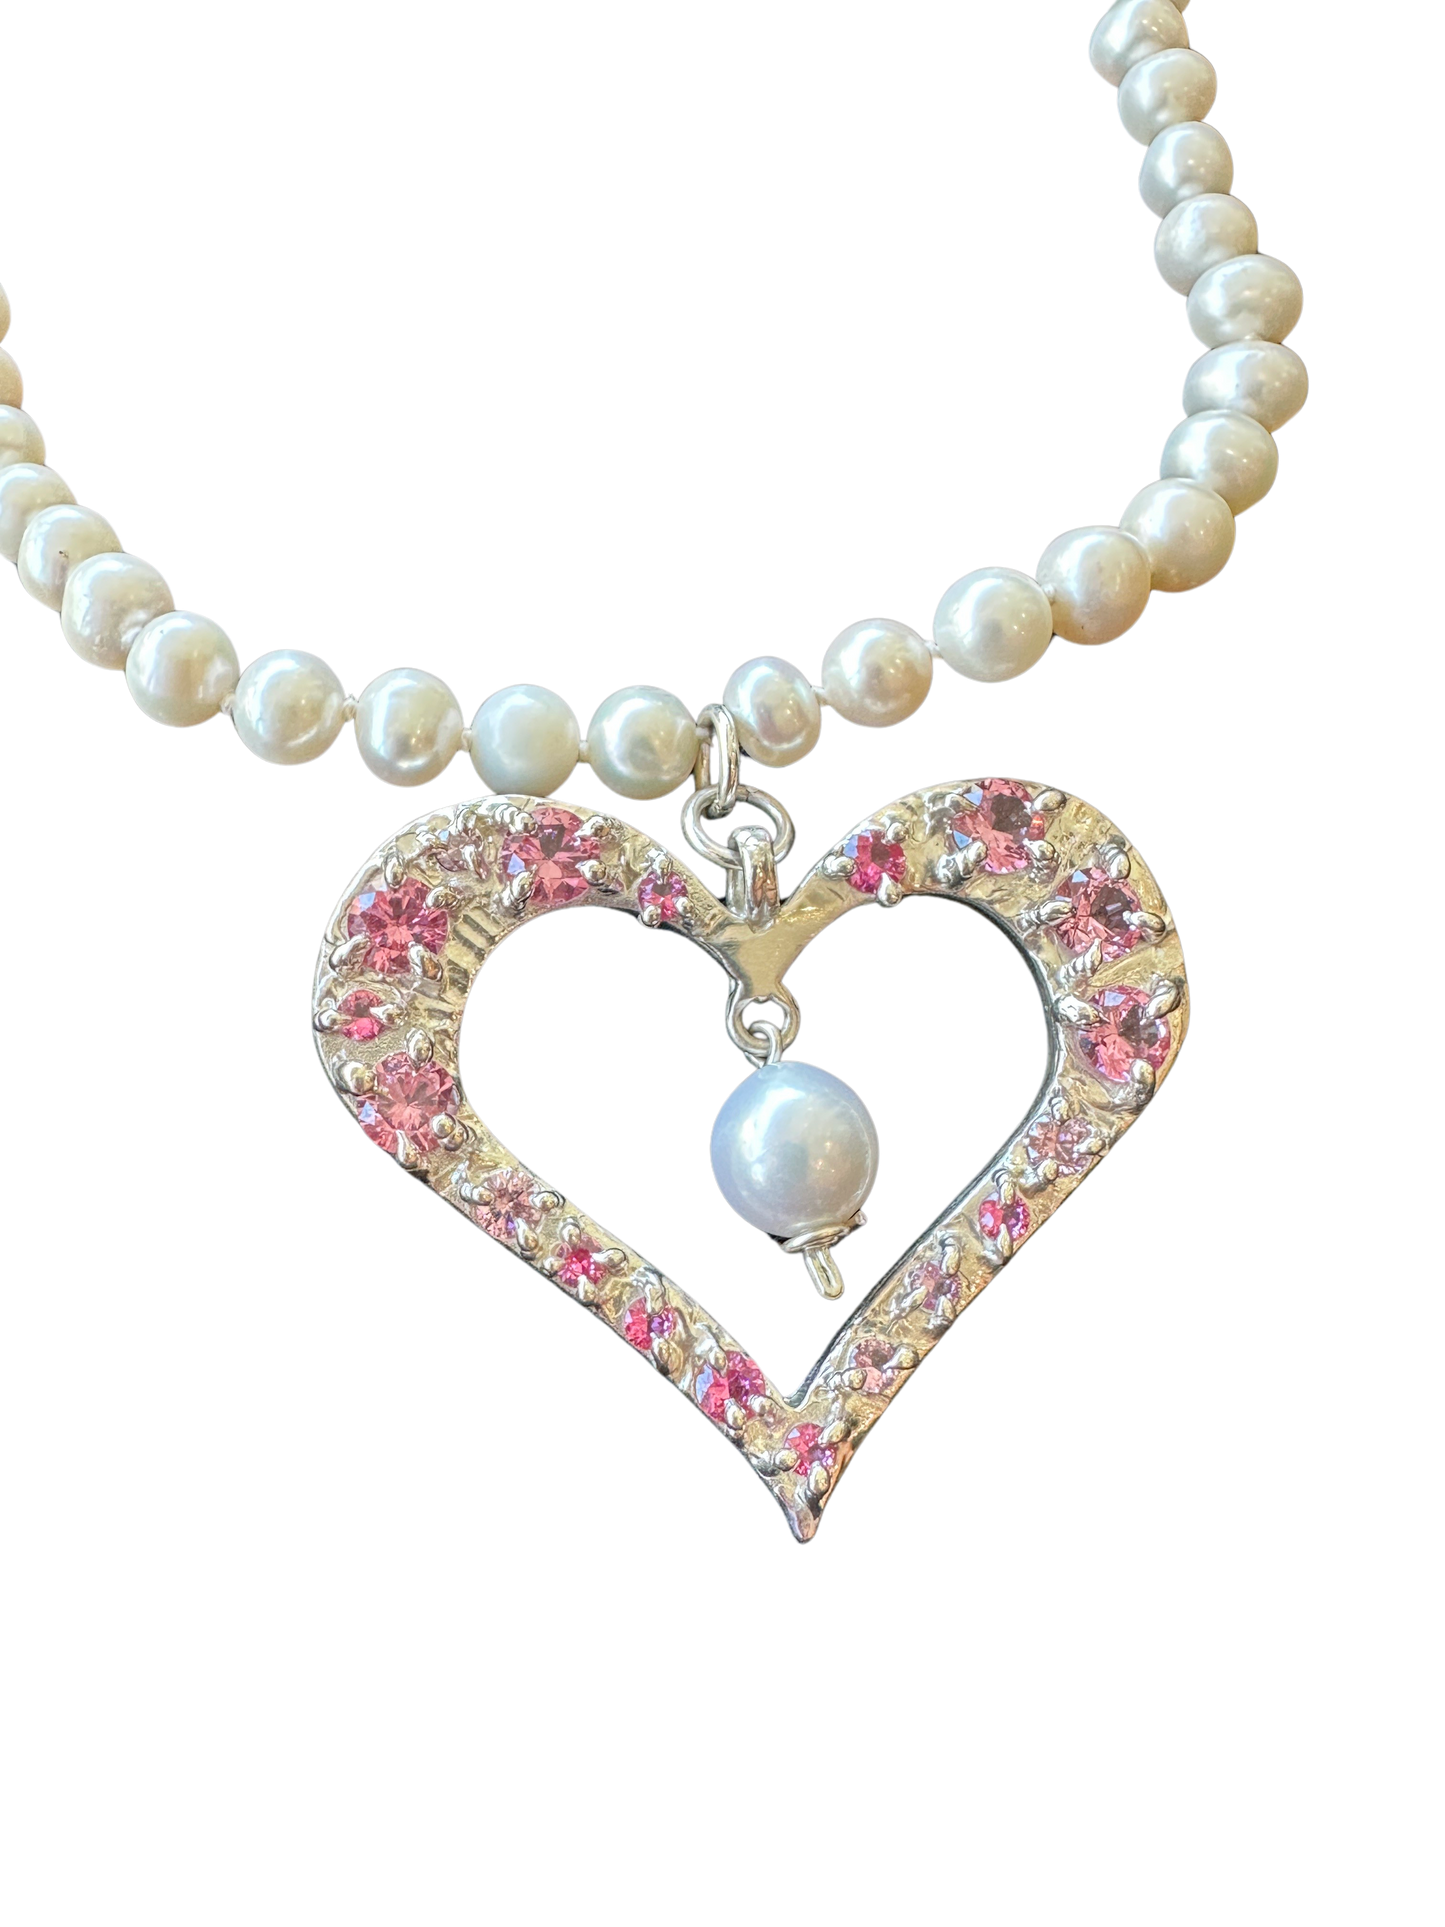 Summer Heart Pendant on Pearls